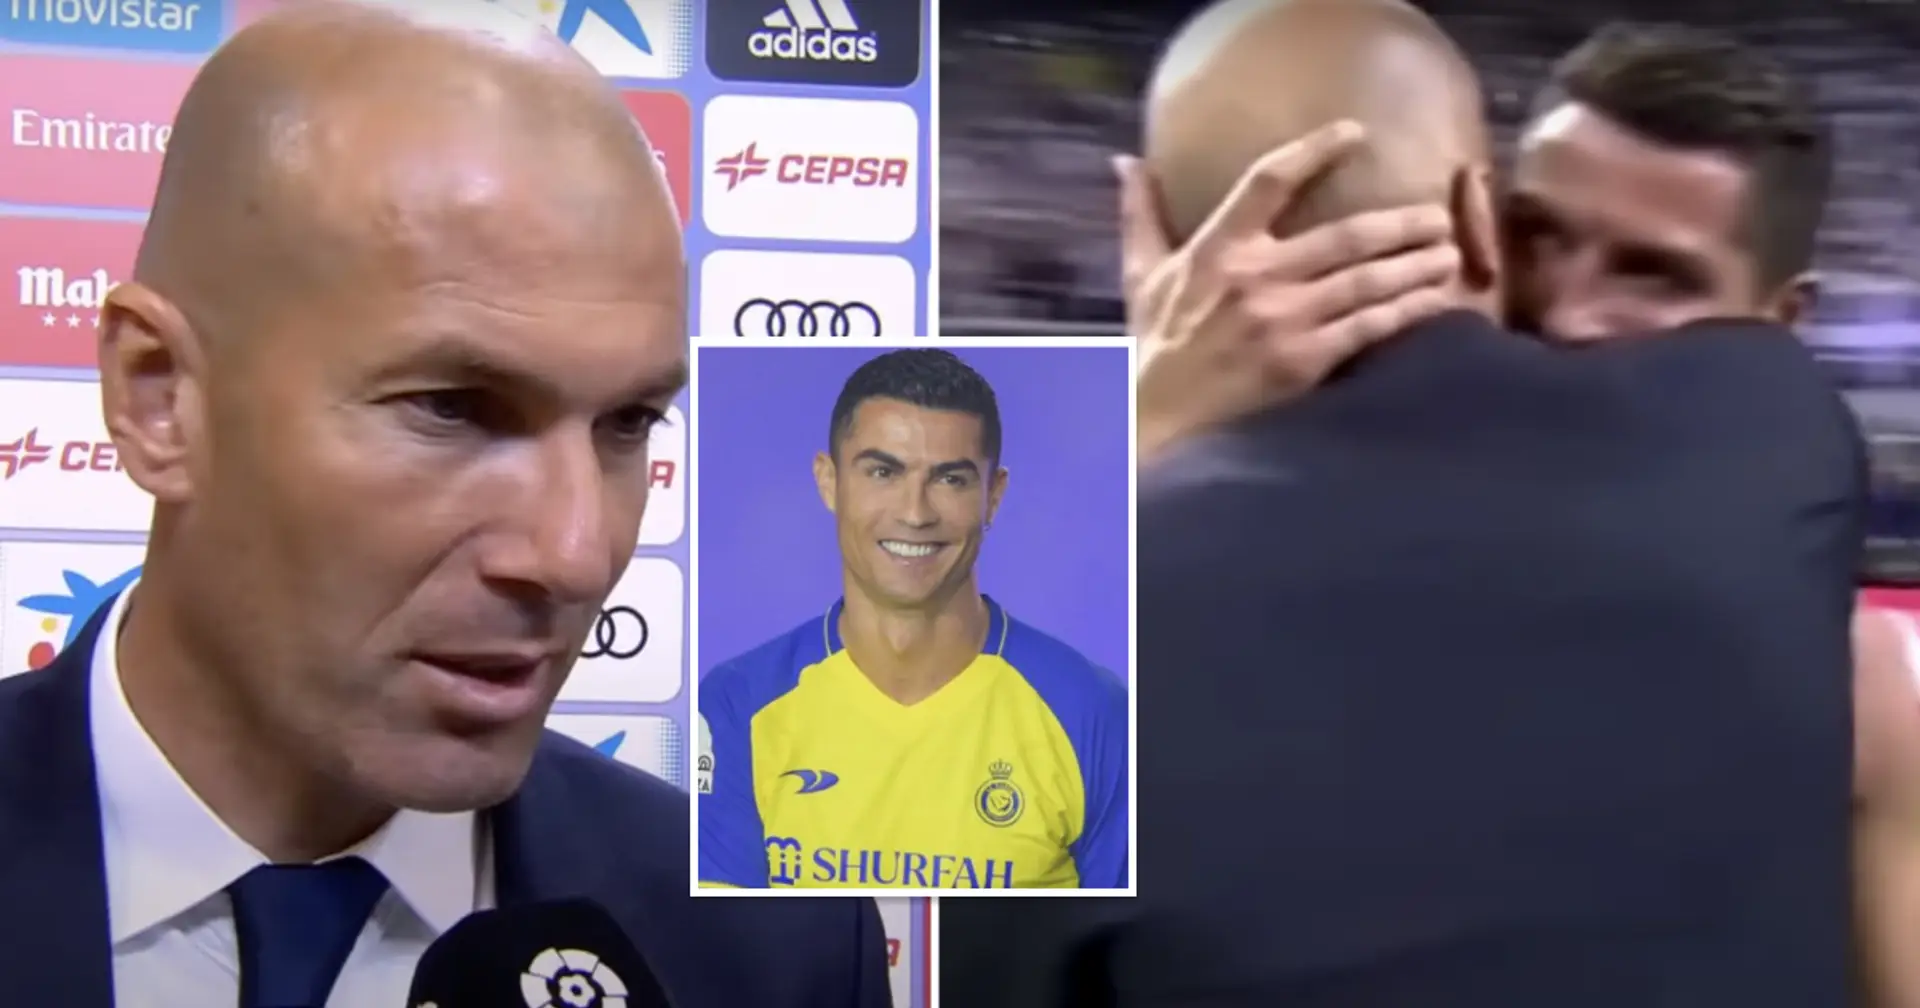 Zidane receives €150m offer to reunite with Ronaldo at Al Nassr, Zizou's stance revealed